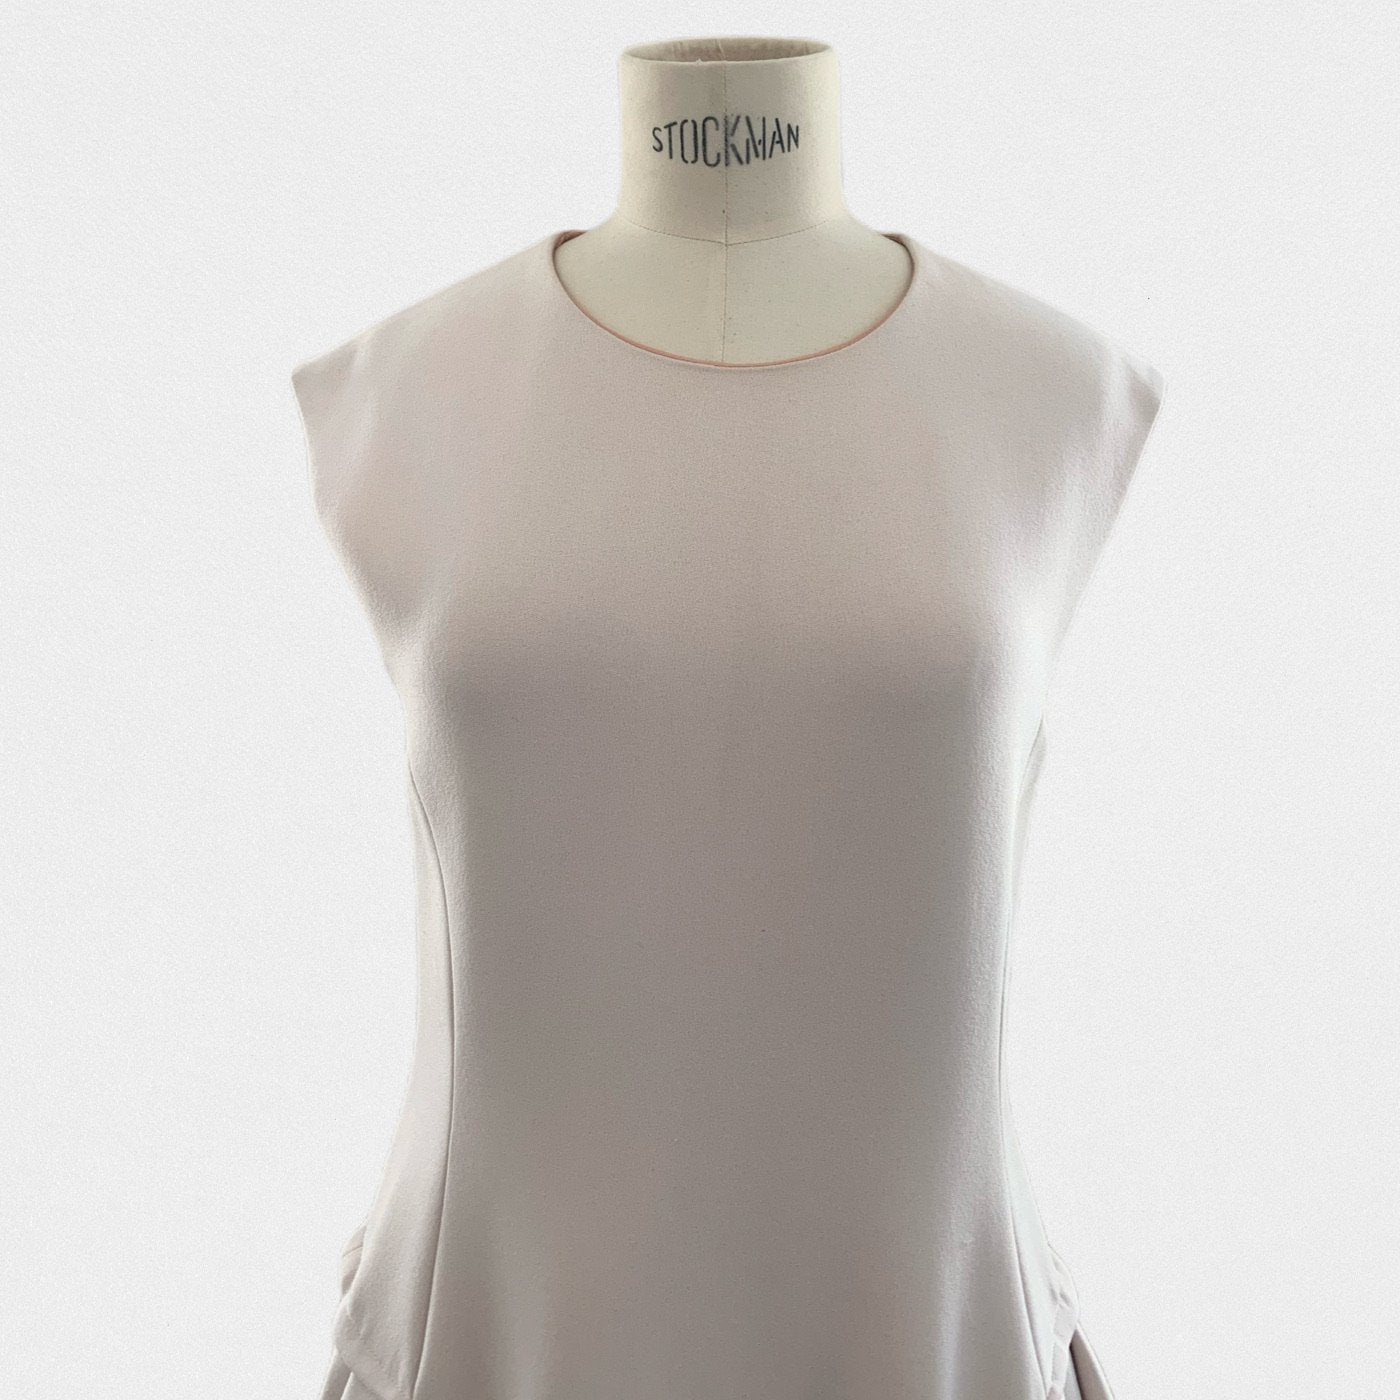 Lysis vintage Christian Dior midi dress by Raf Simons - M - 2010s